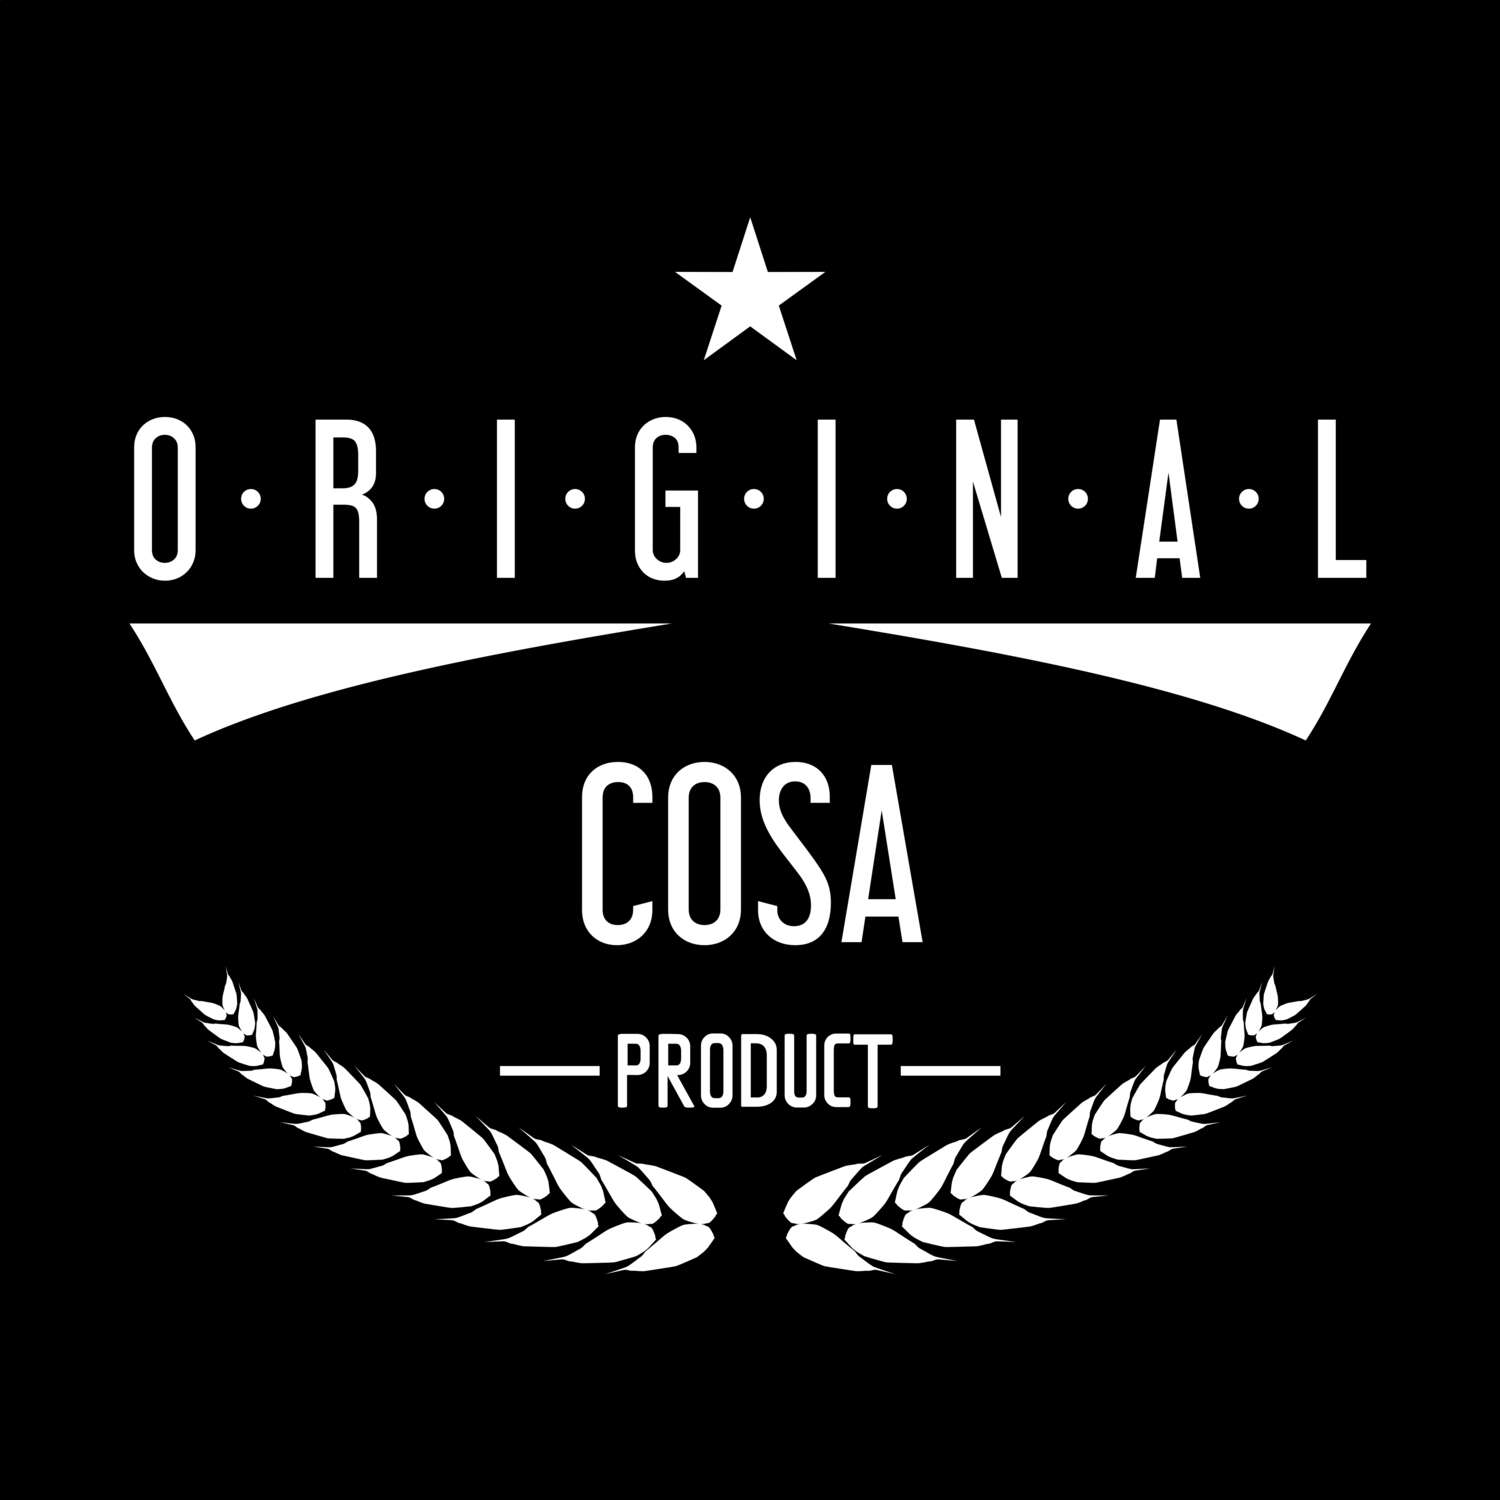 Cosa T-Shirt »Original Product«